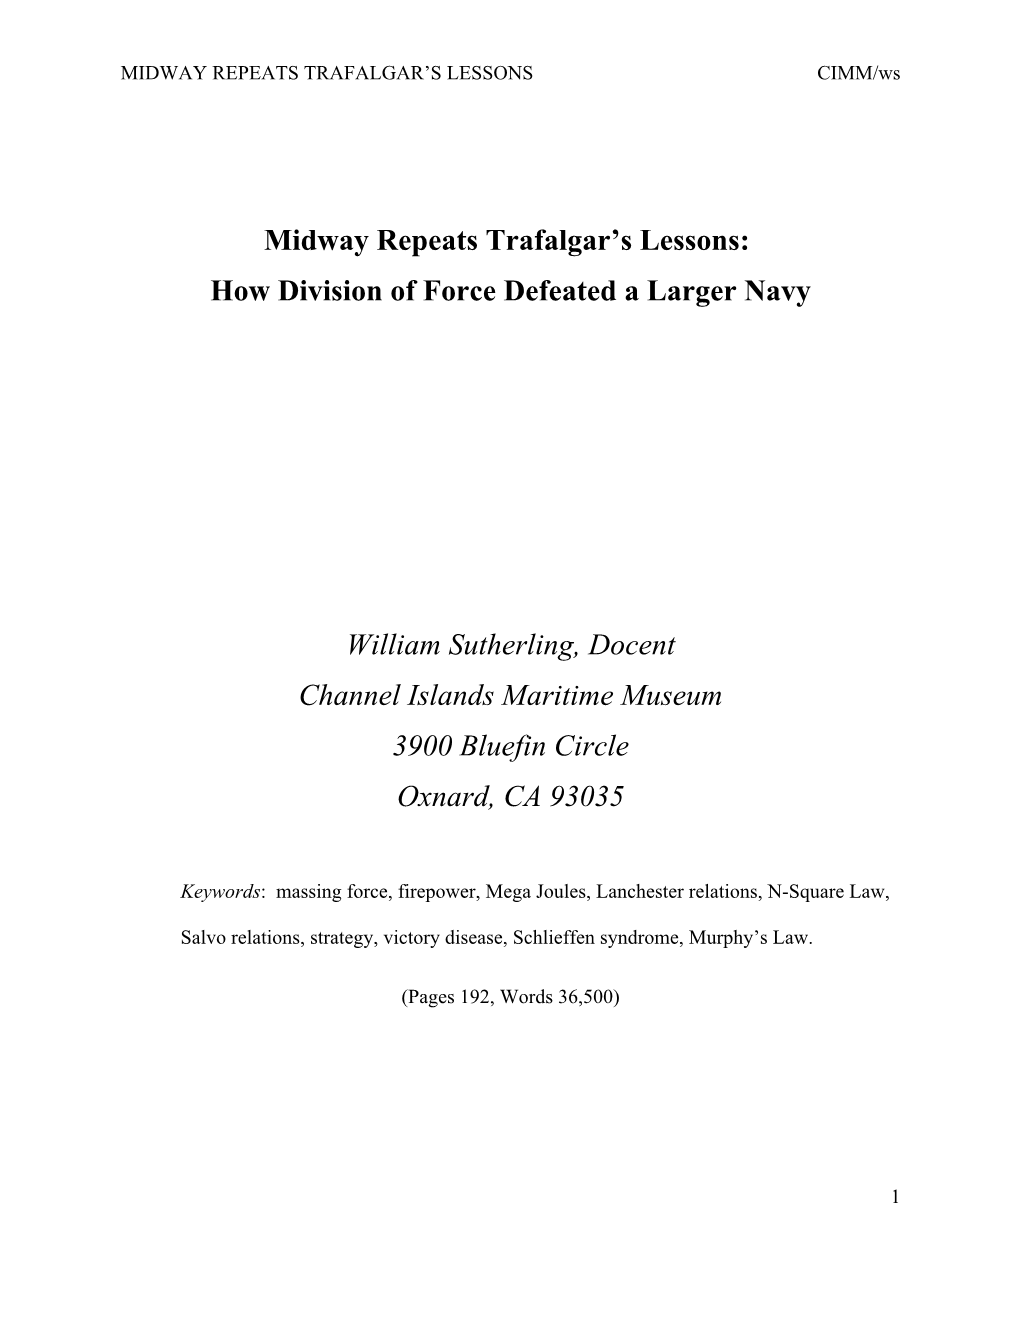 Midway Repeats Trafalgar's Lessons